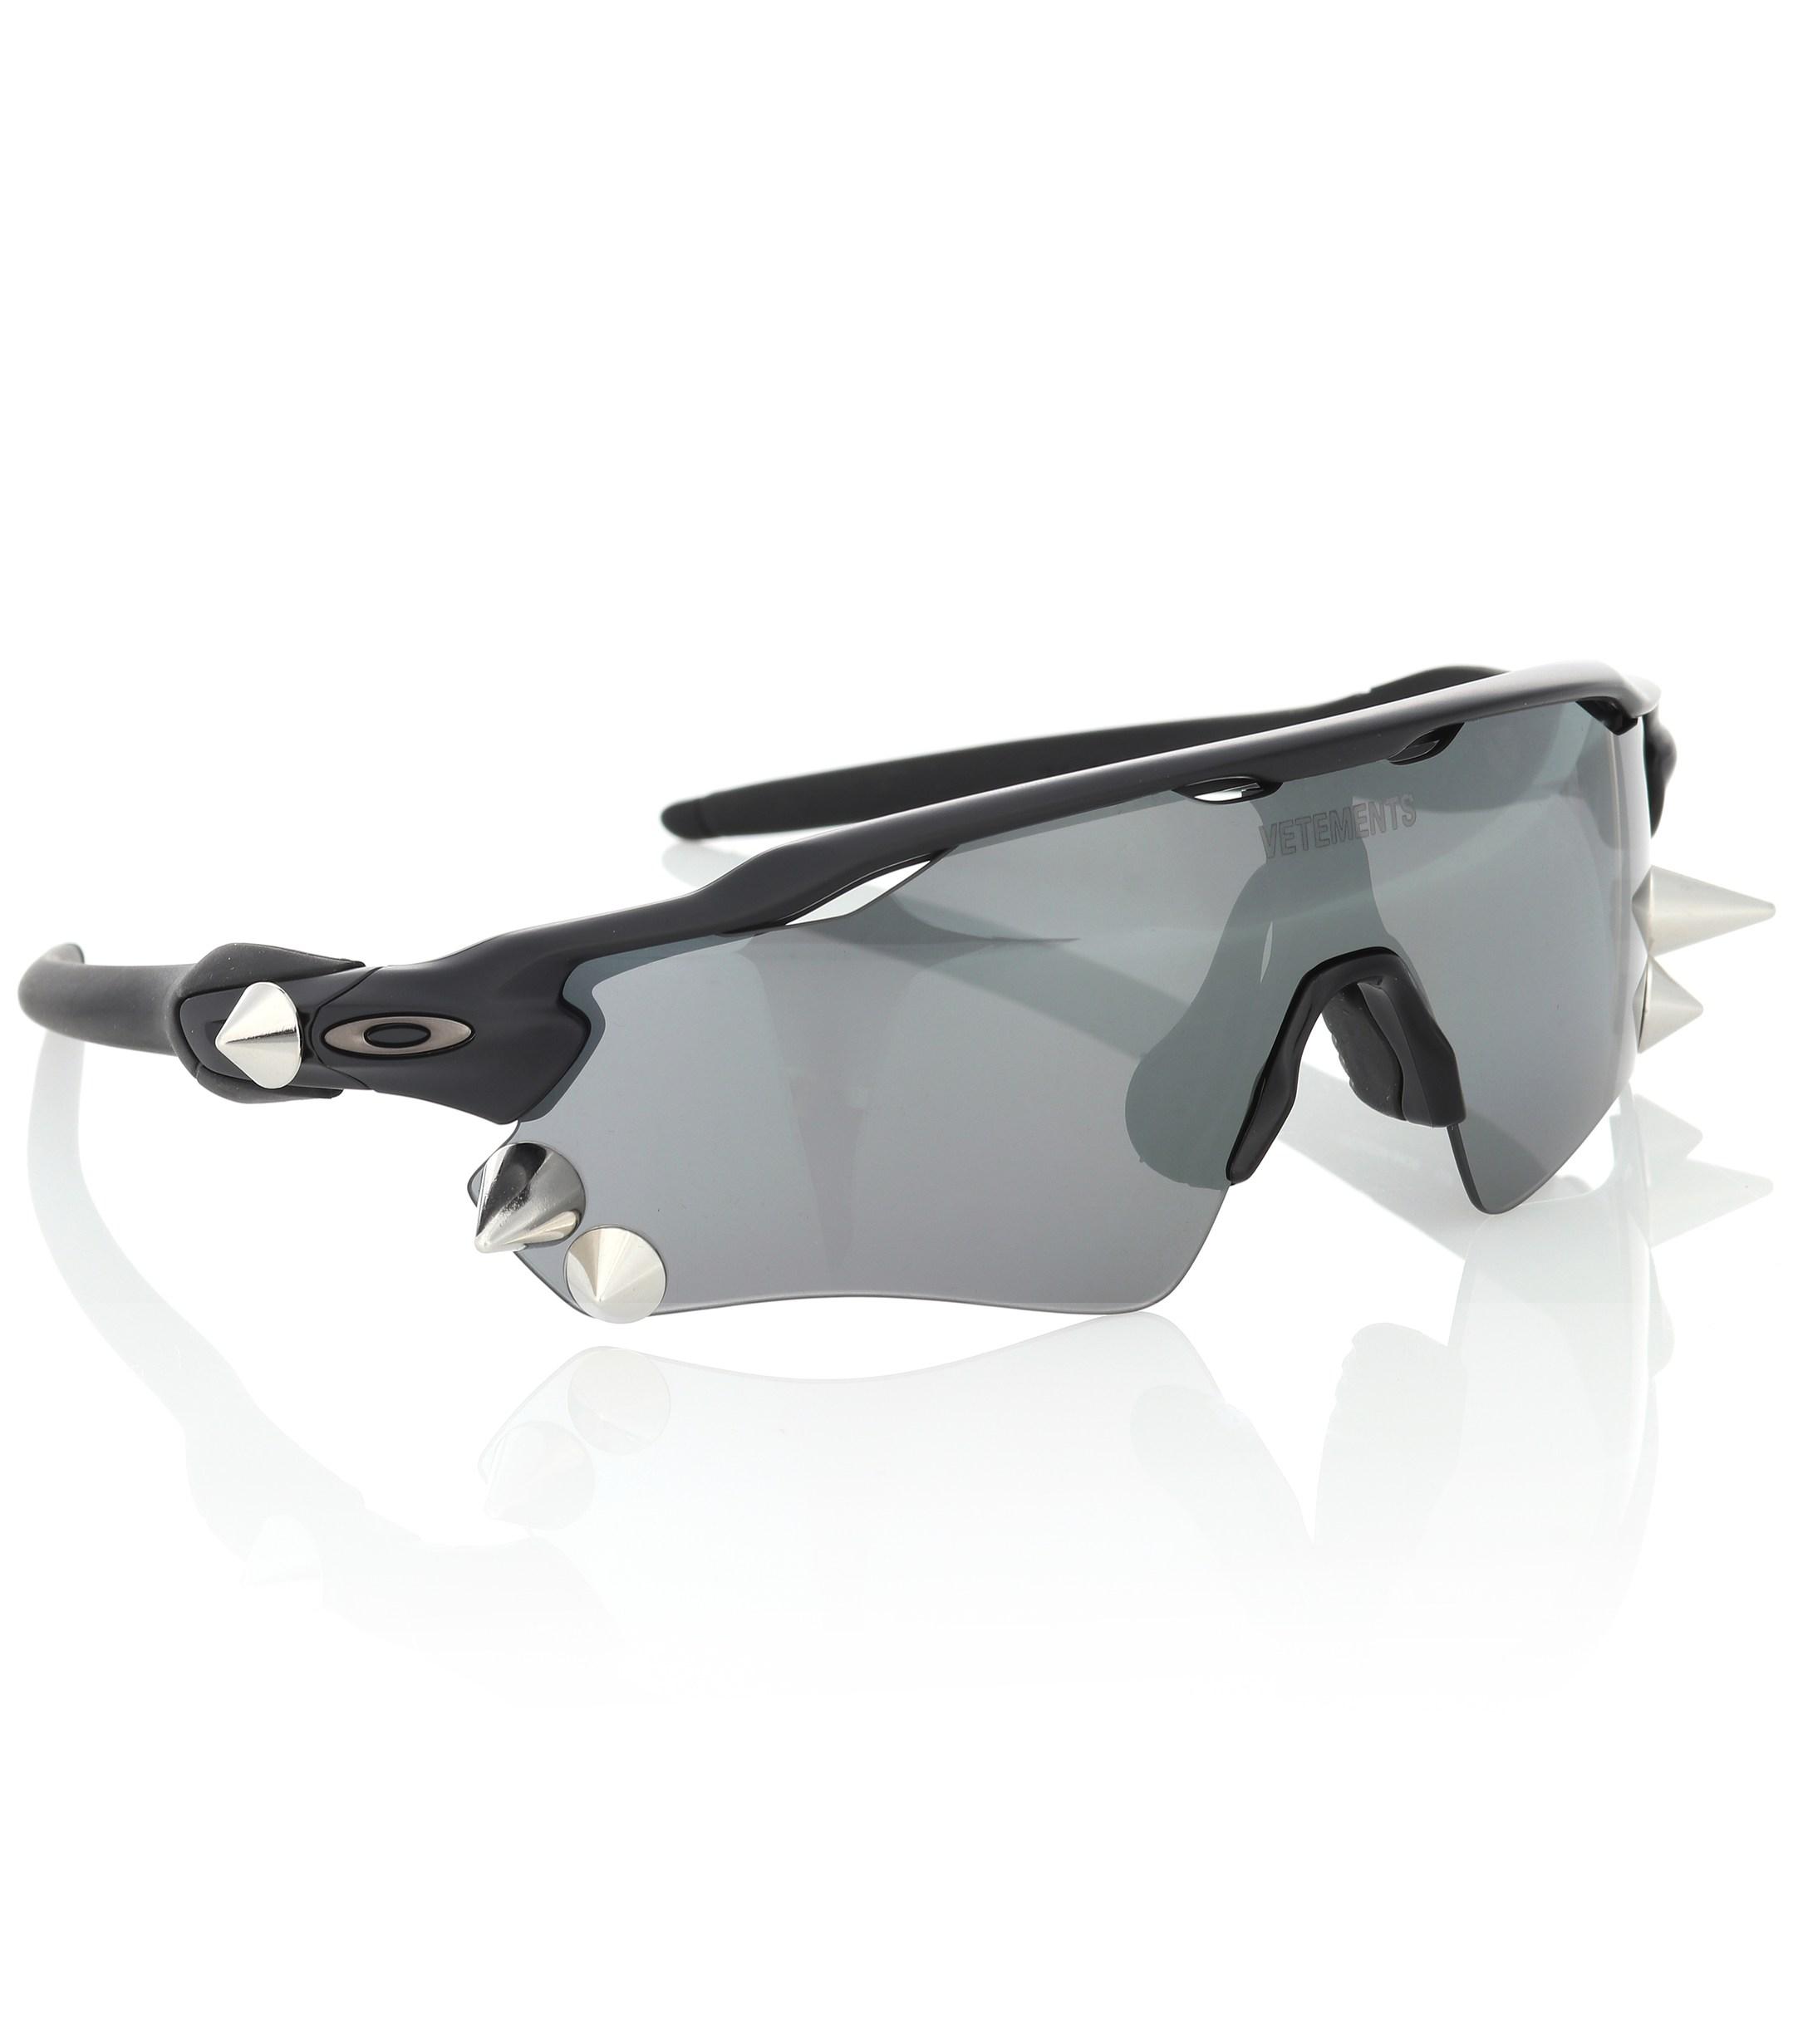 Vetements X Oakley Spiked Sunglasses in Black | Lyst